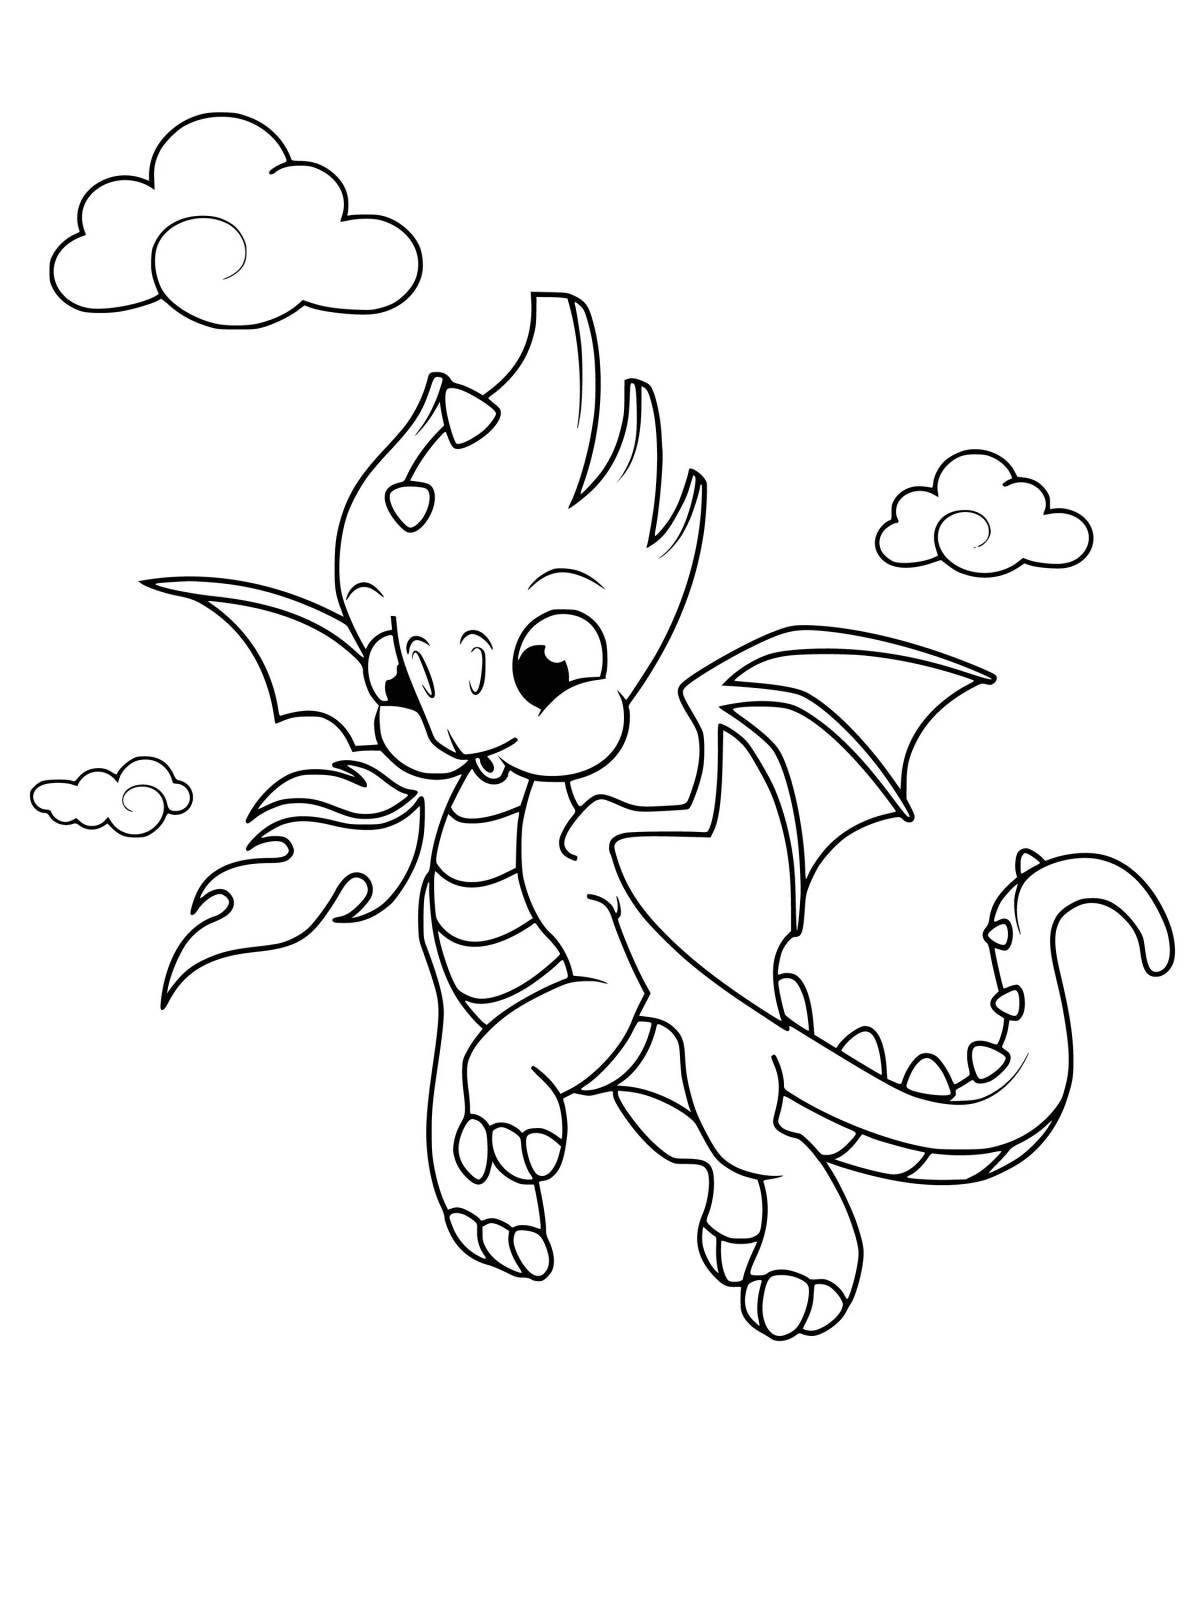 Cute cute dragon coloring book